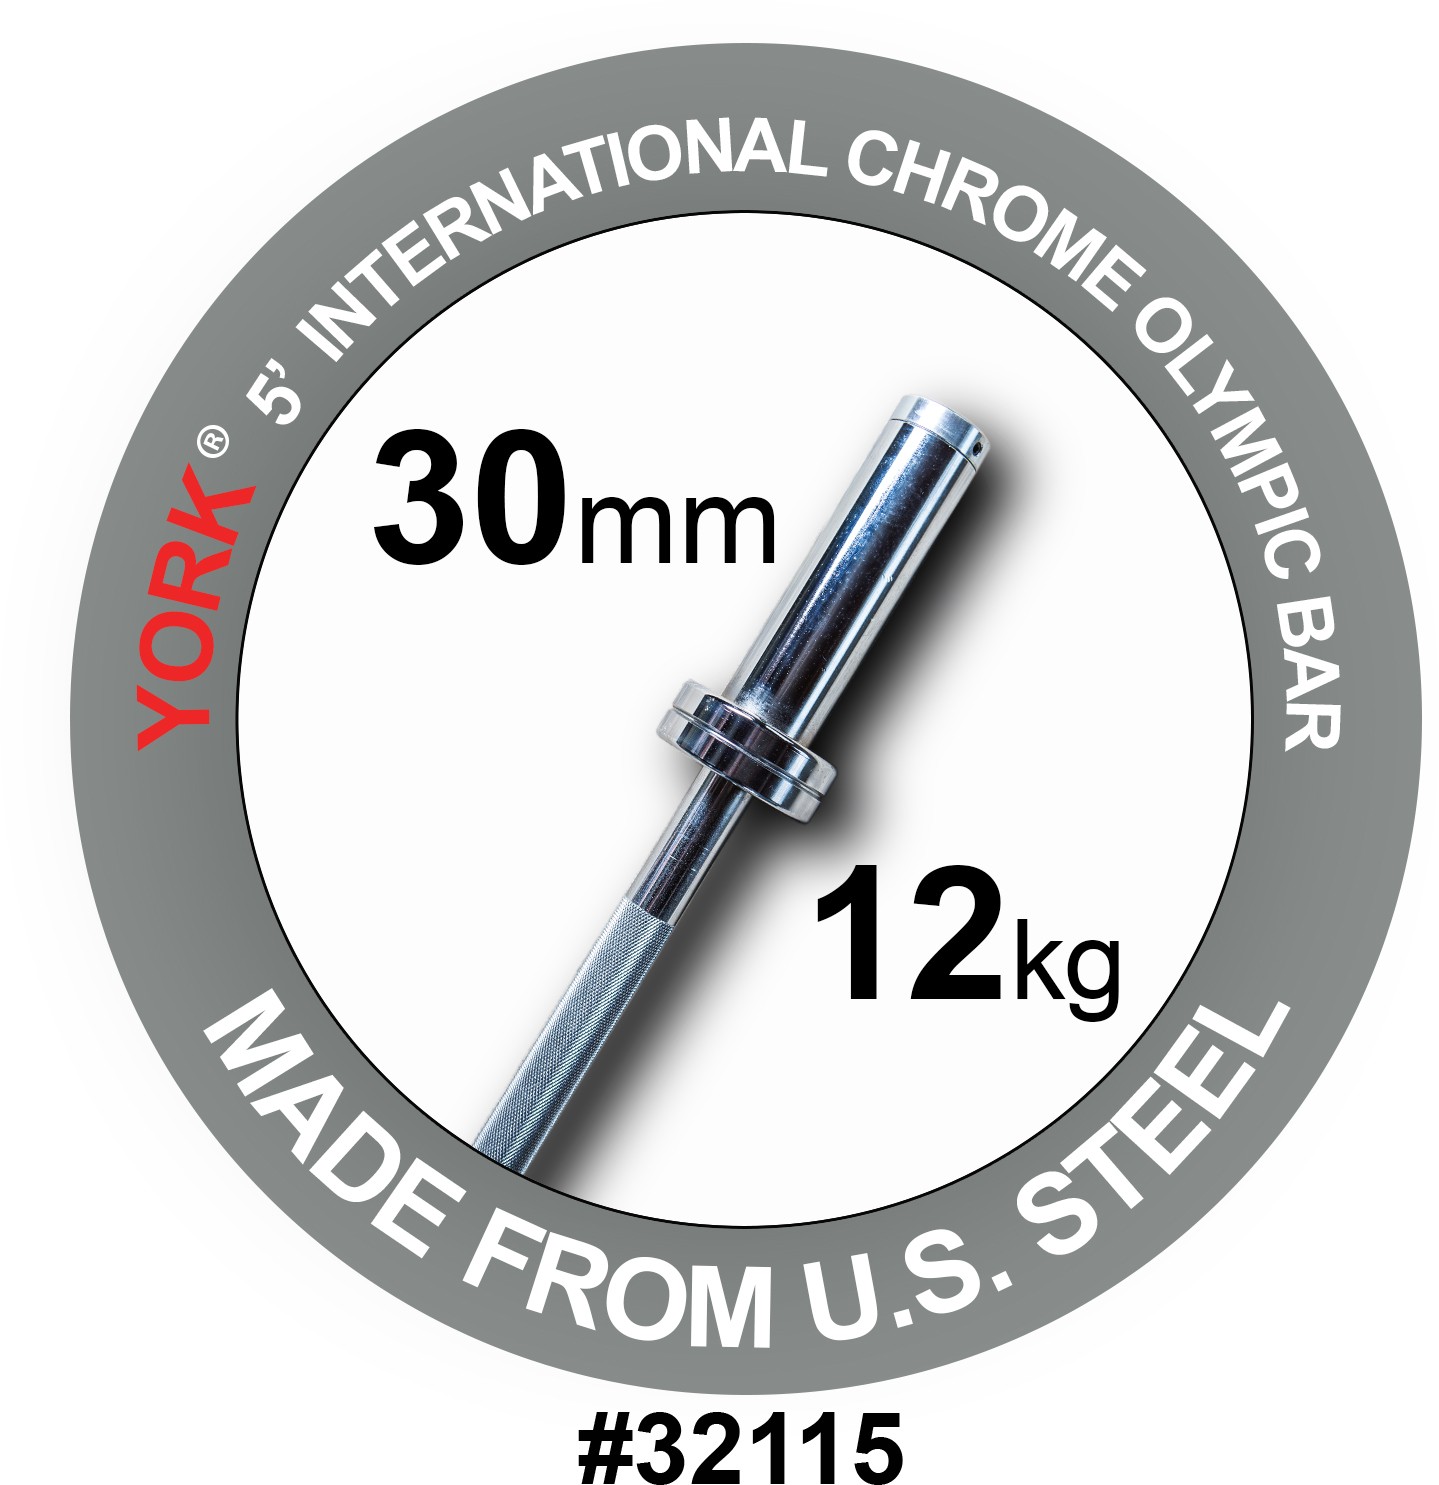 York 5′ International Chrome Olympic Weight Bar – 30mm (New)